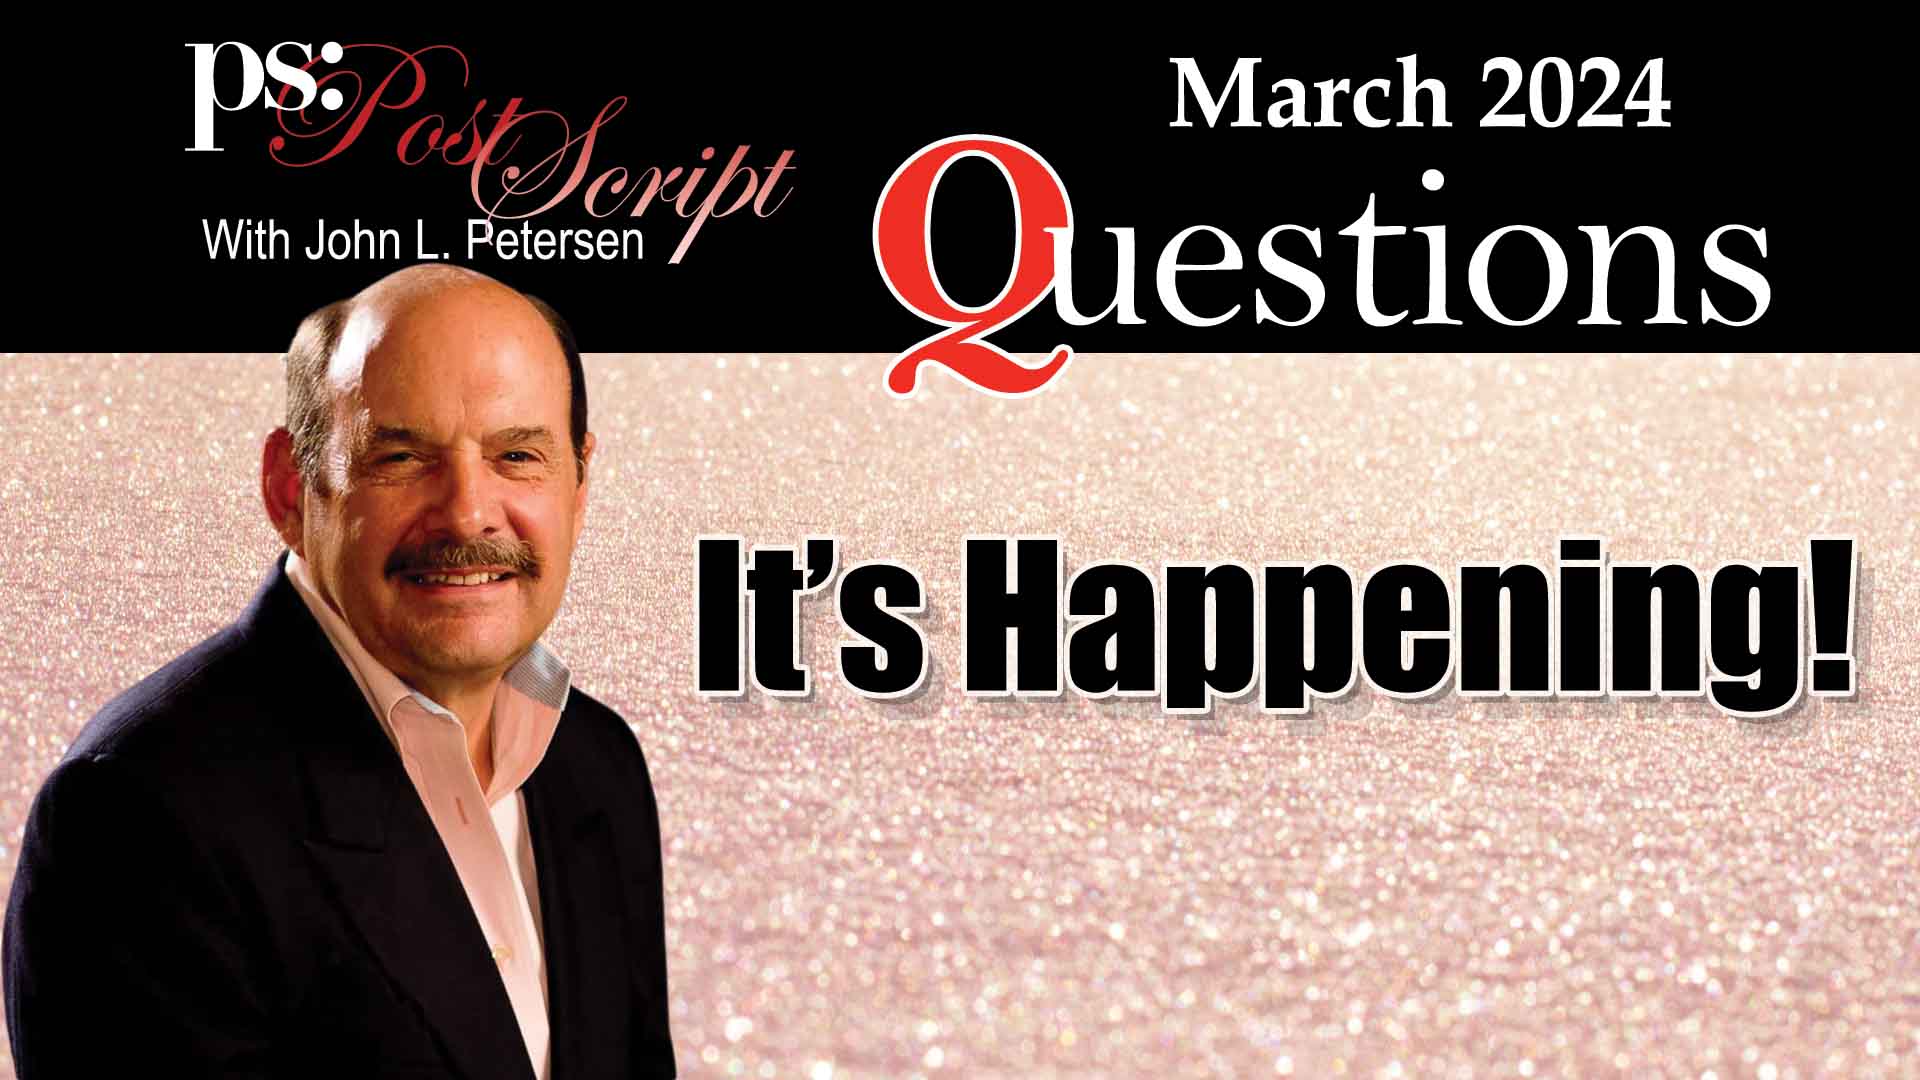 It's Happening! PostScript Questions Premium March 2024